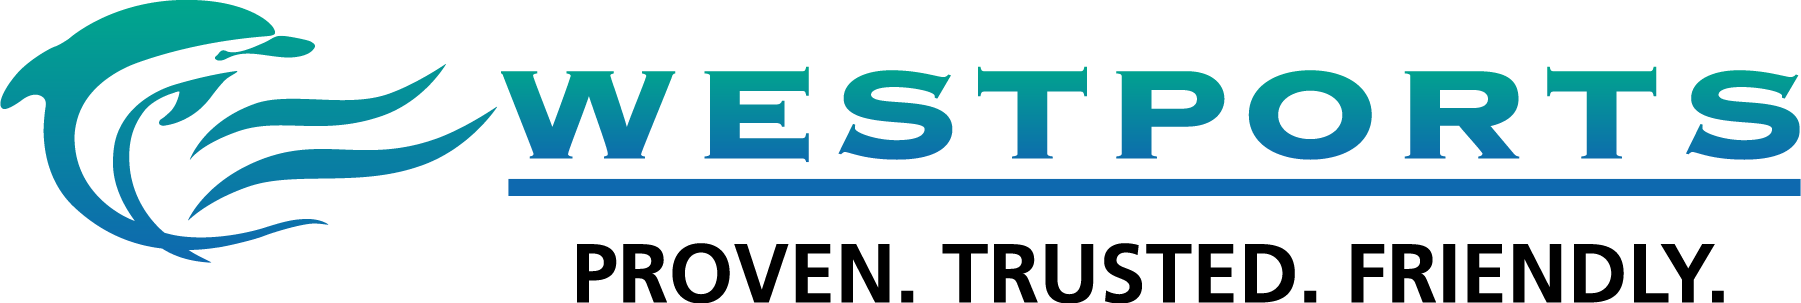 Westports logo large (transparent PNG)